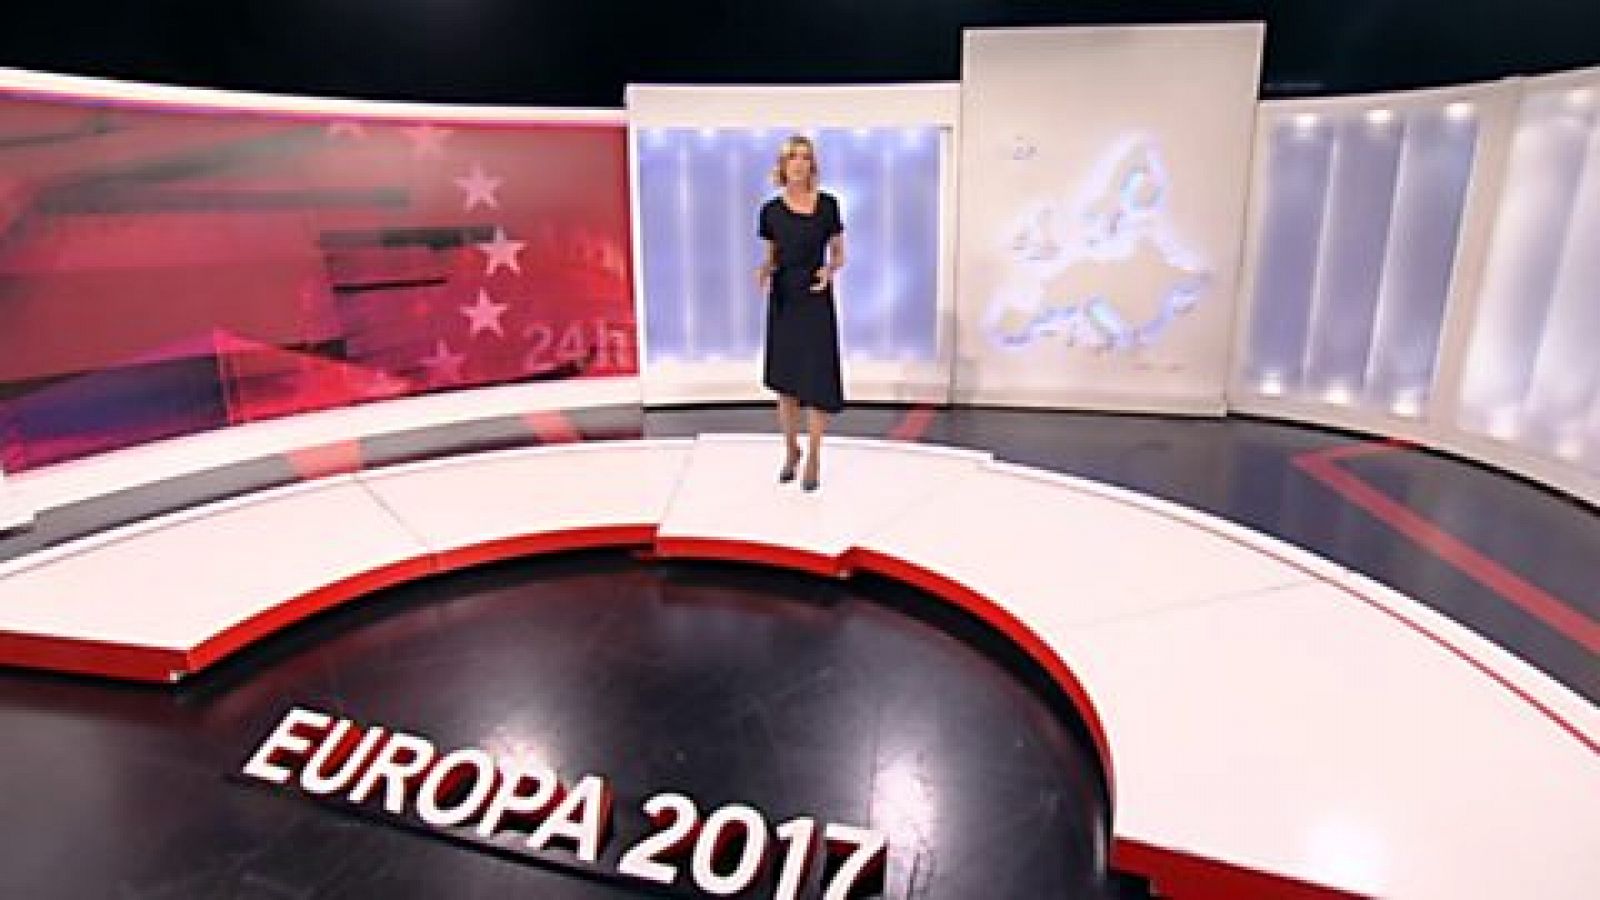 Europa 2024: Europa 2017 - 20/10/17 | RTVE Play